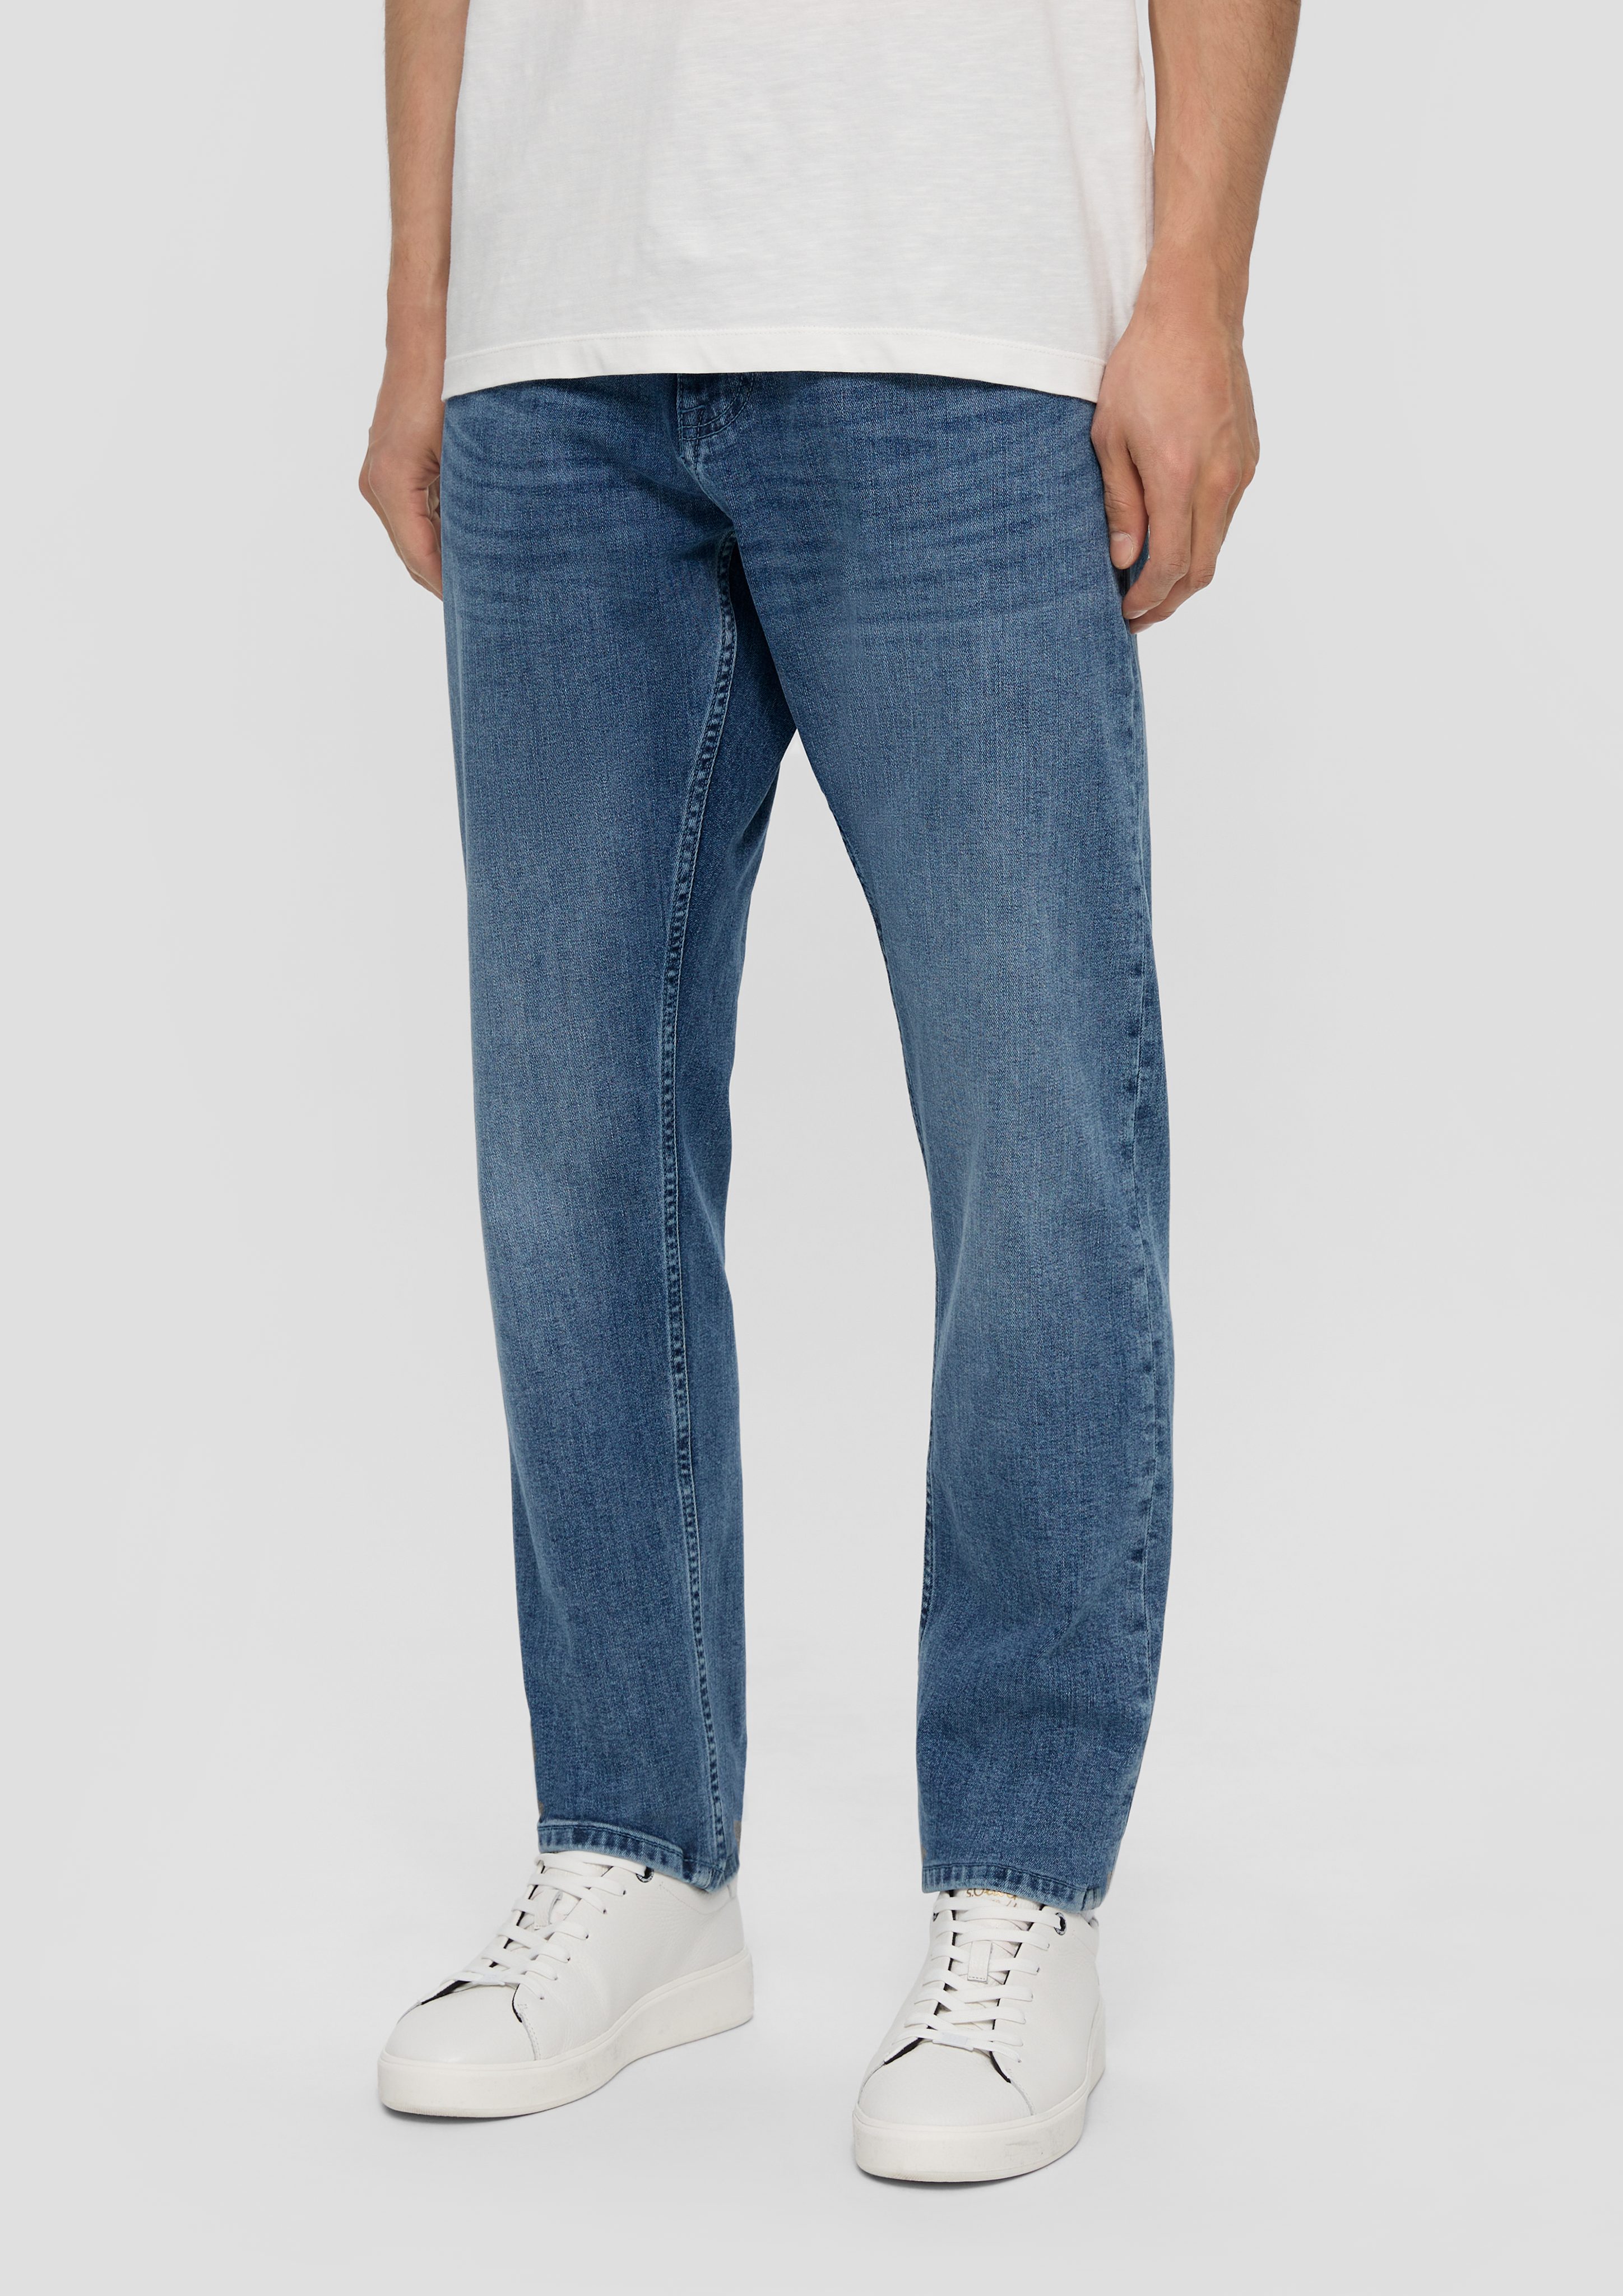 Online-Einkauf im Versandhandel s.Oliver Stoffhose Jeans Mauro / Label-Patch Rise Regular Leg / Fit Tapered blau High 